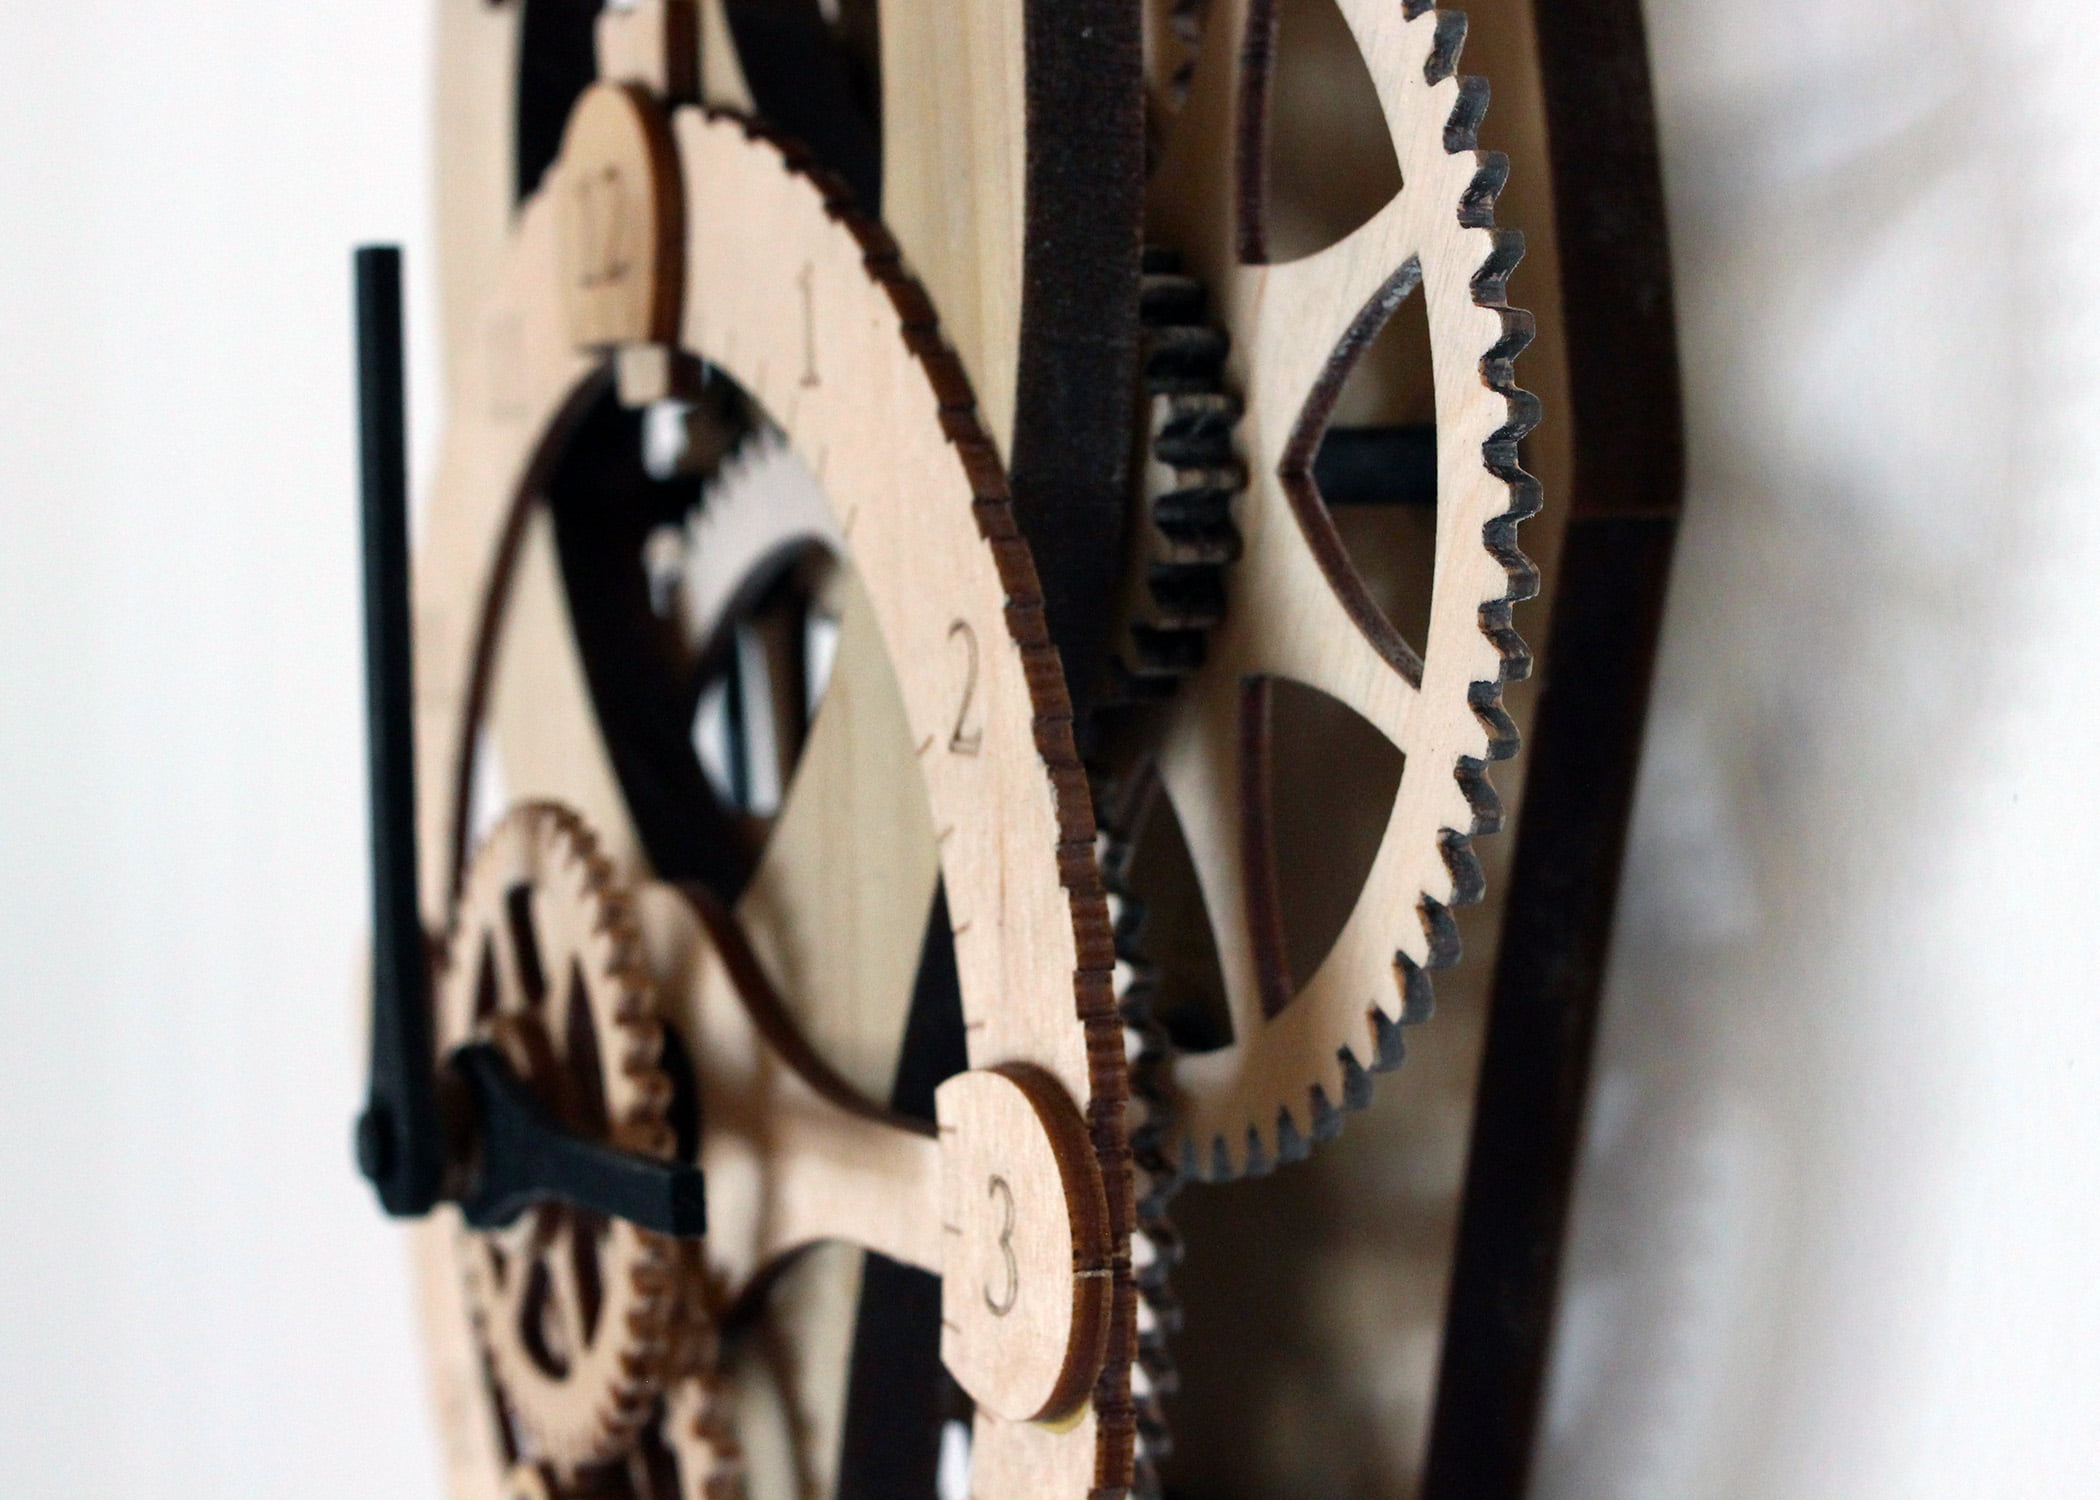 Deluxe Mechanical Wood Vera Clock Kit DIY Advanced Project